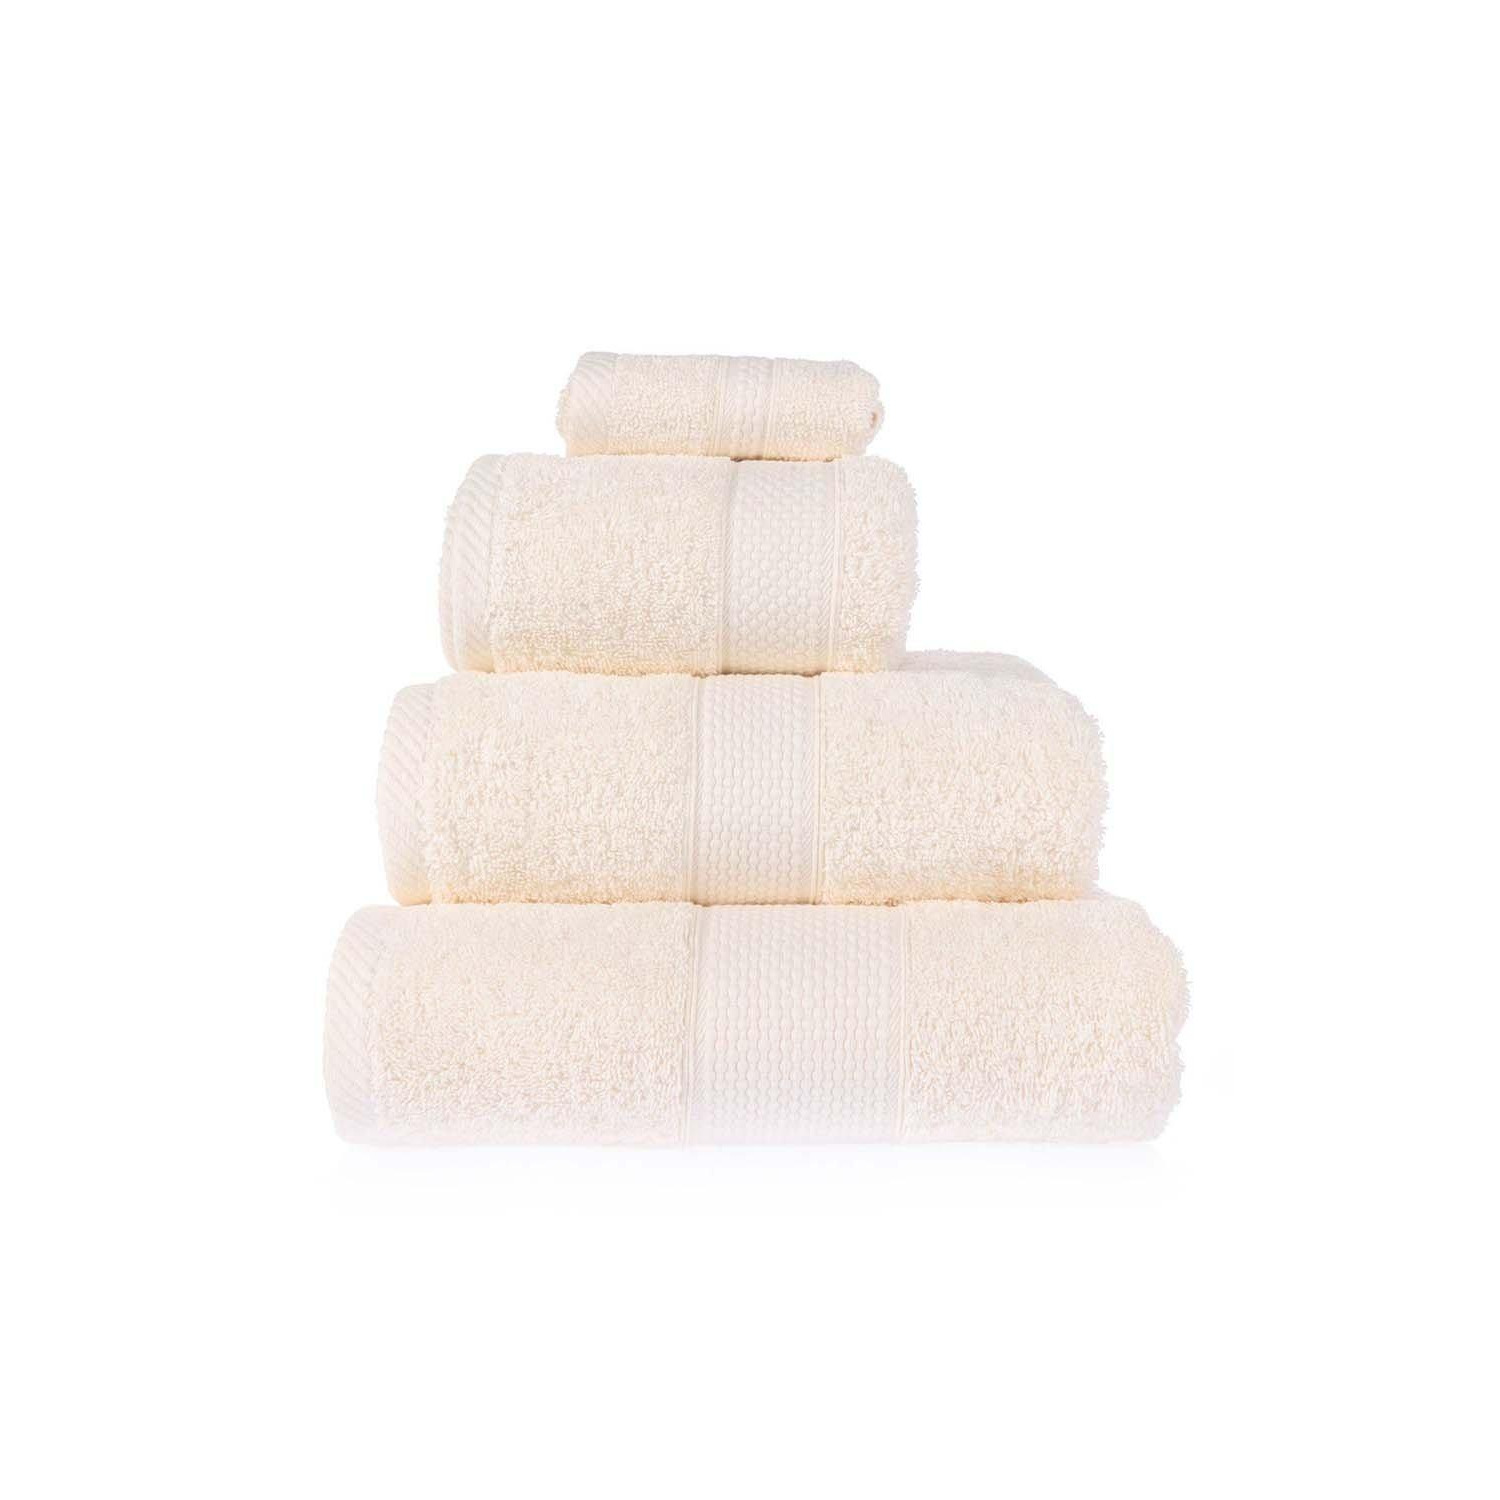 Turkish Cotton Towel - image 1